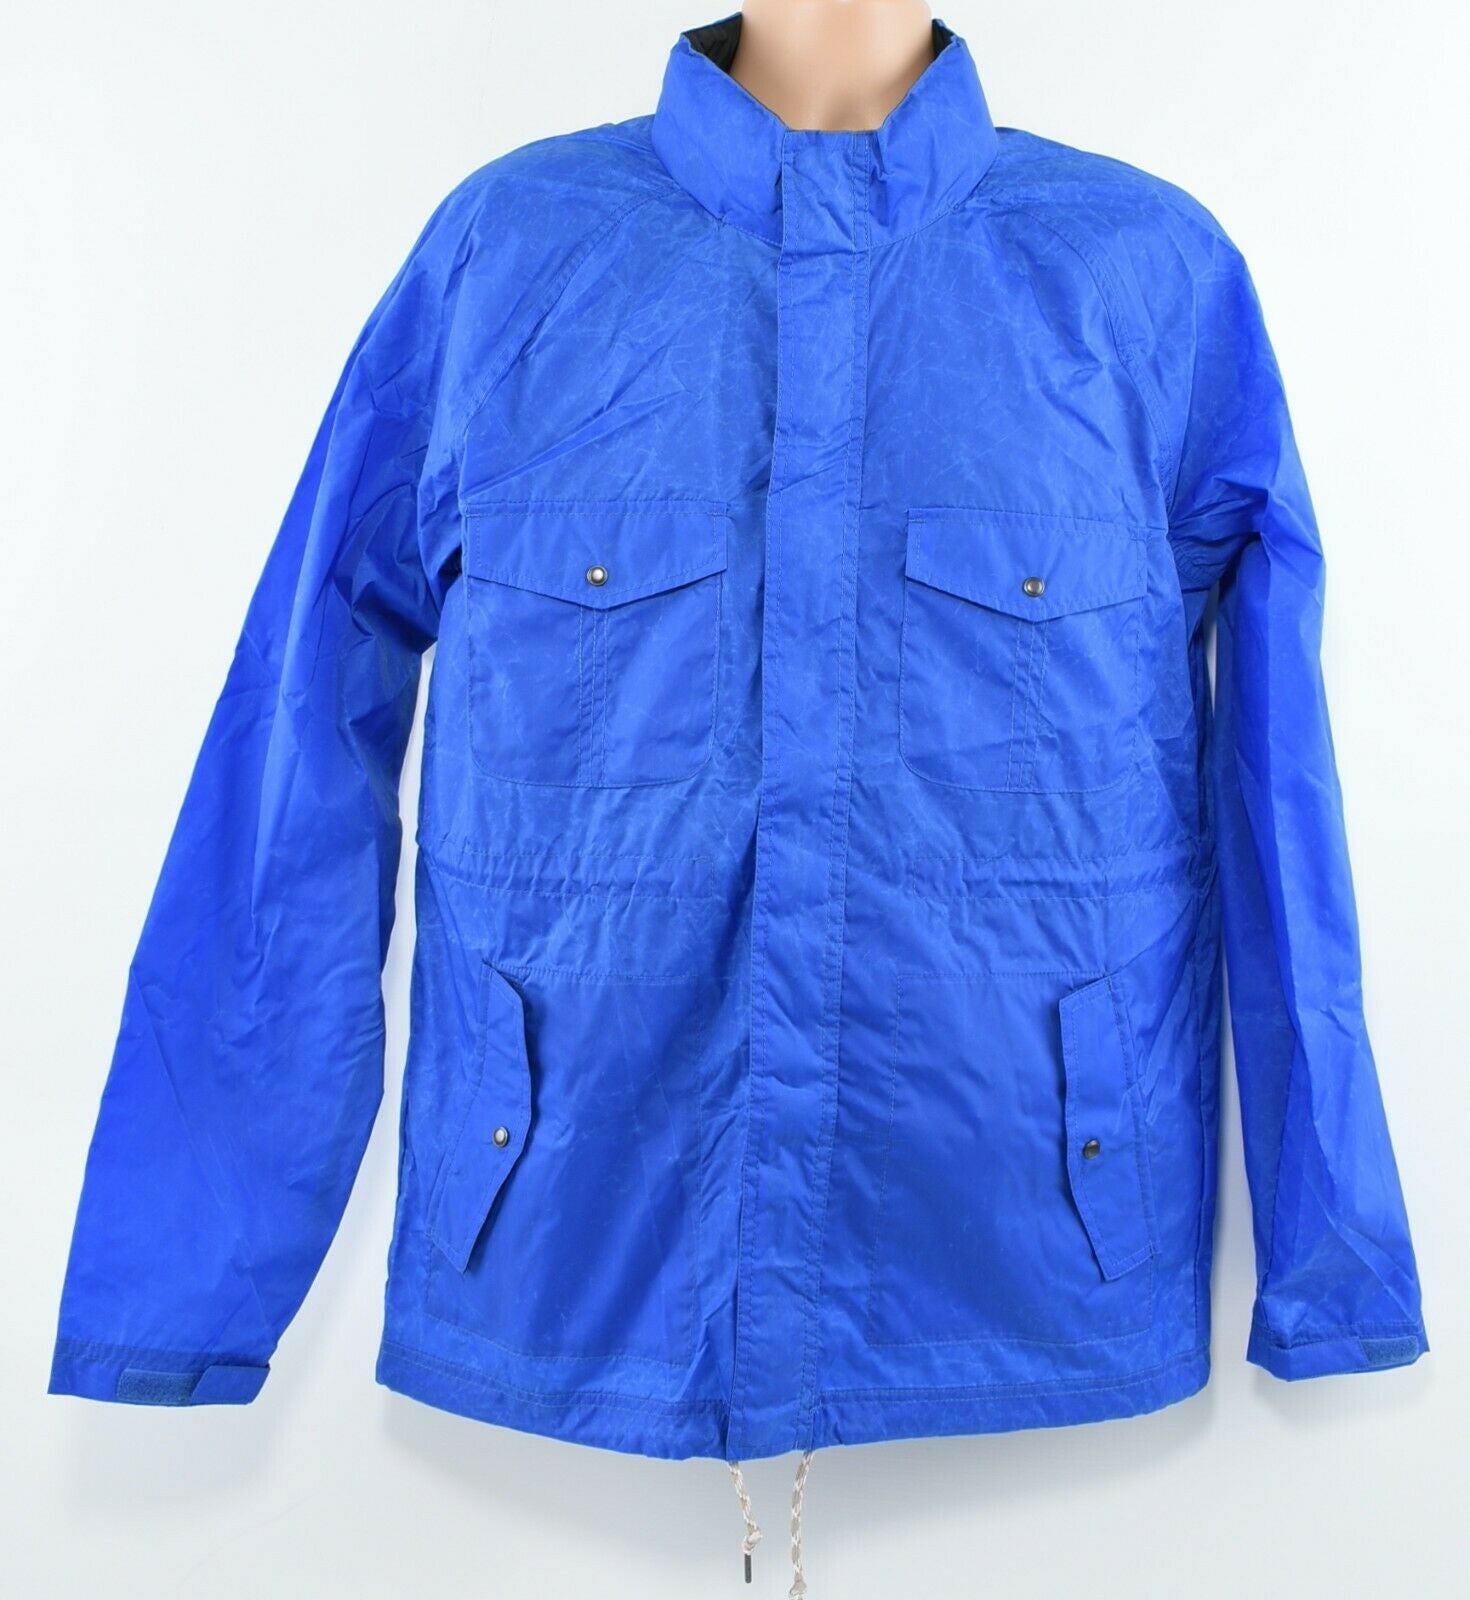 O'NEILL Men's Adventure Gravitas Jacket, Windbreaker, Strong Blue, size M